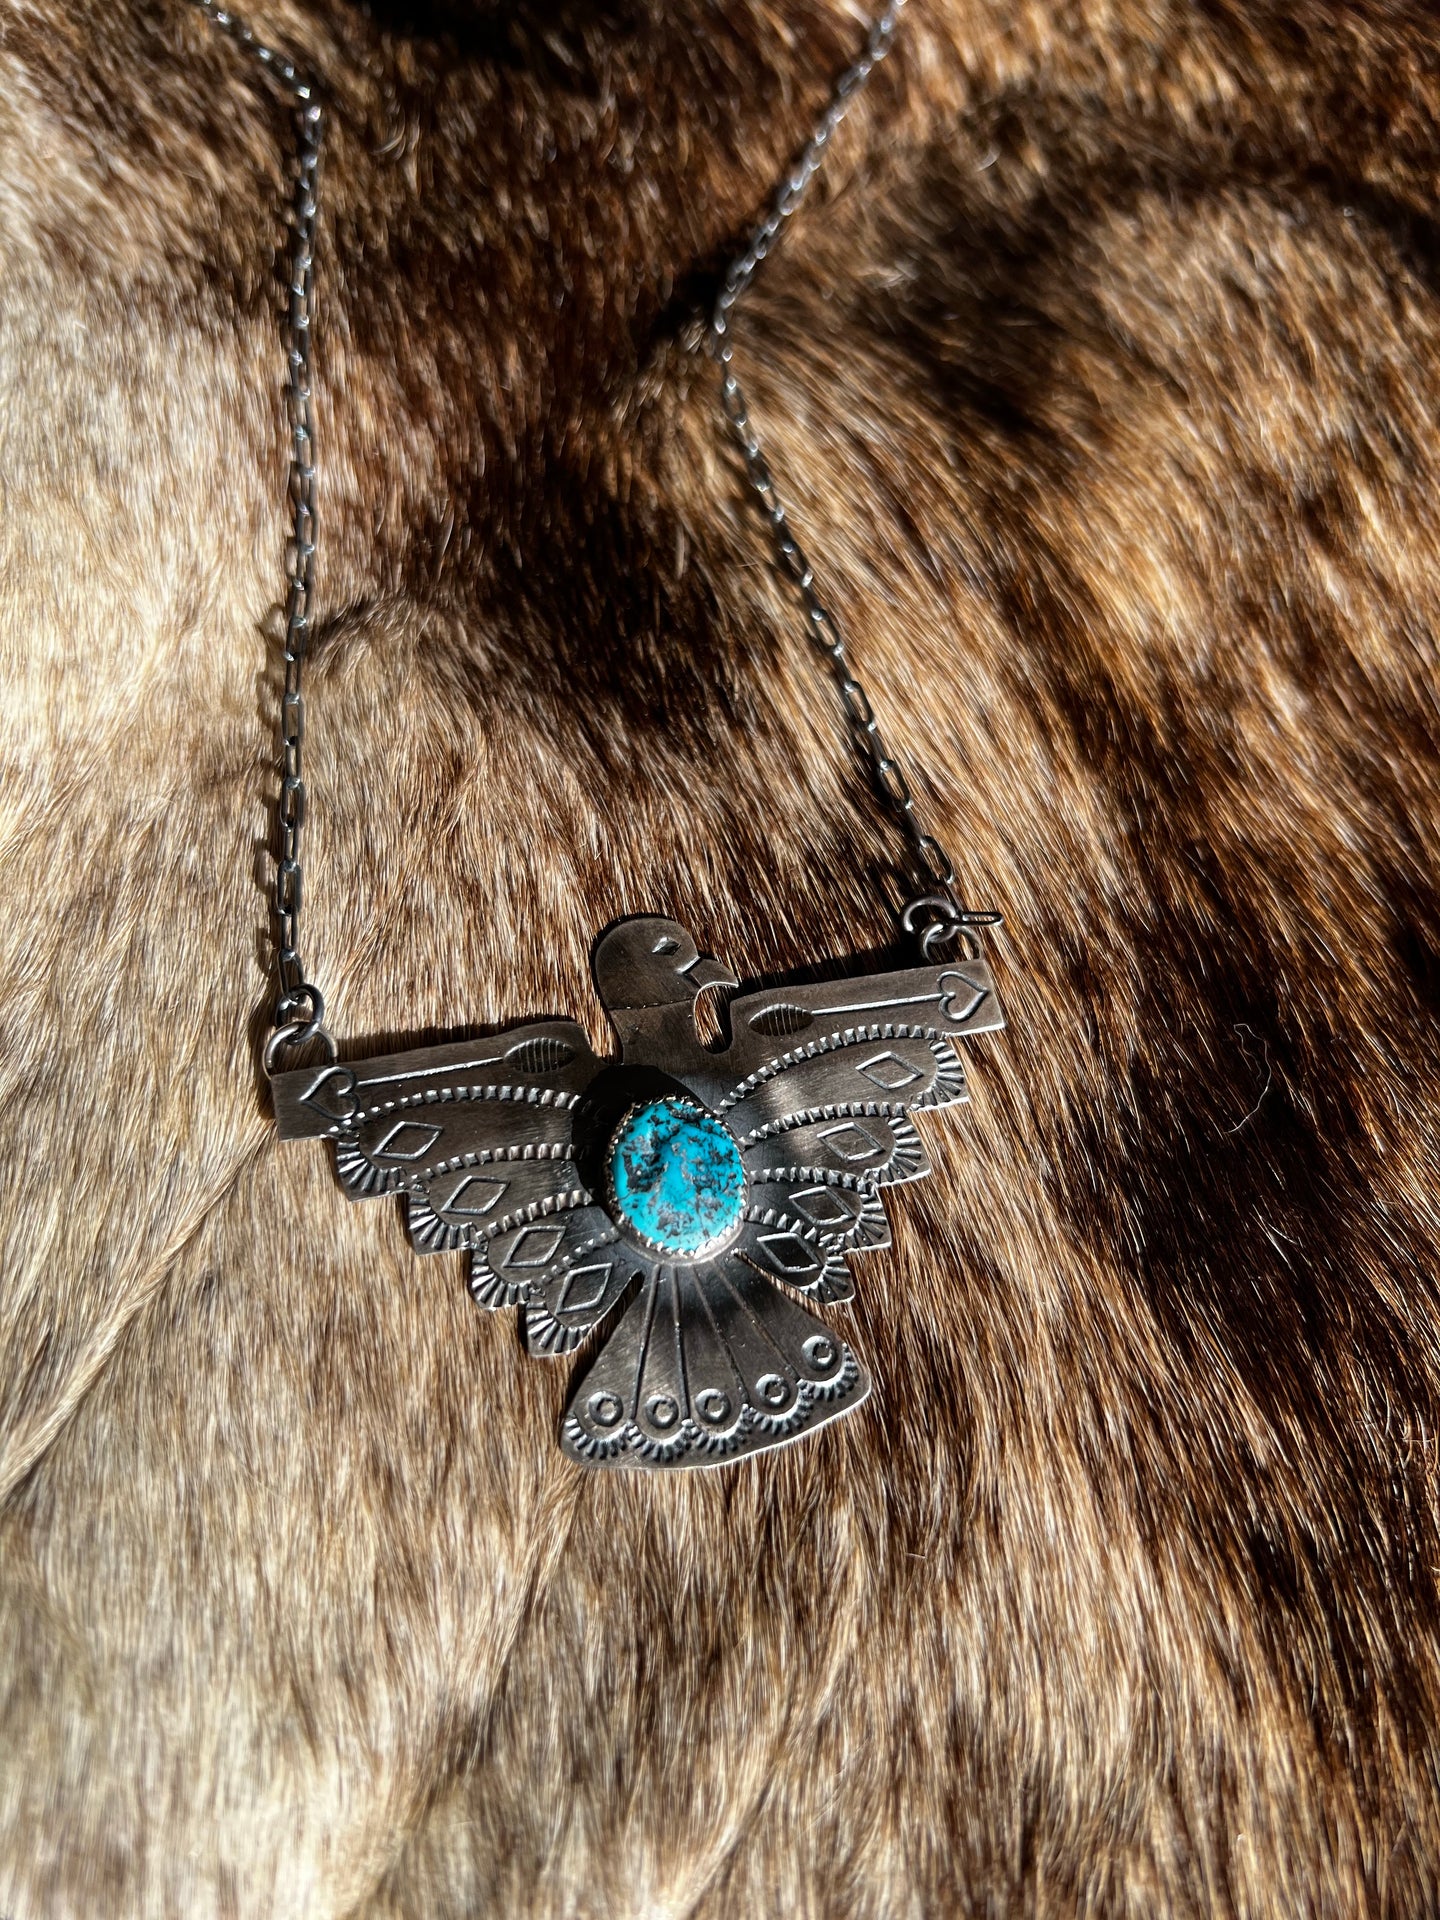 The Thunderbird Necklace